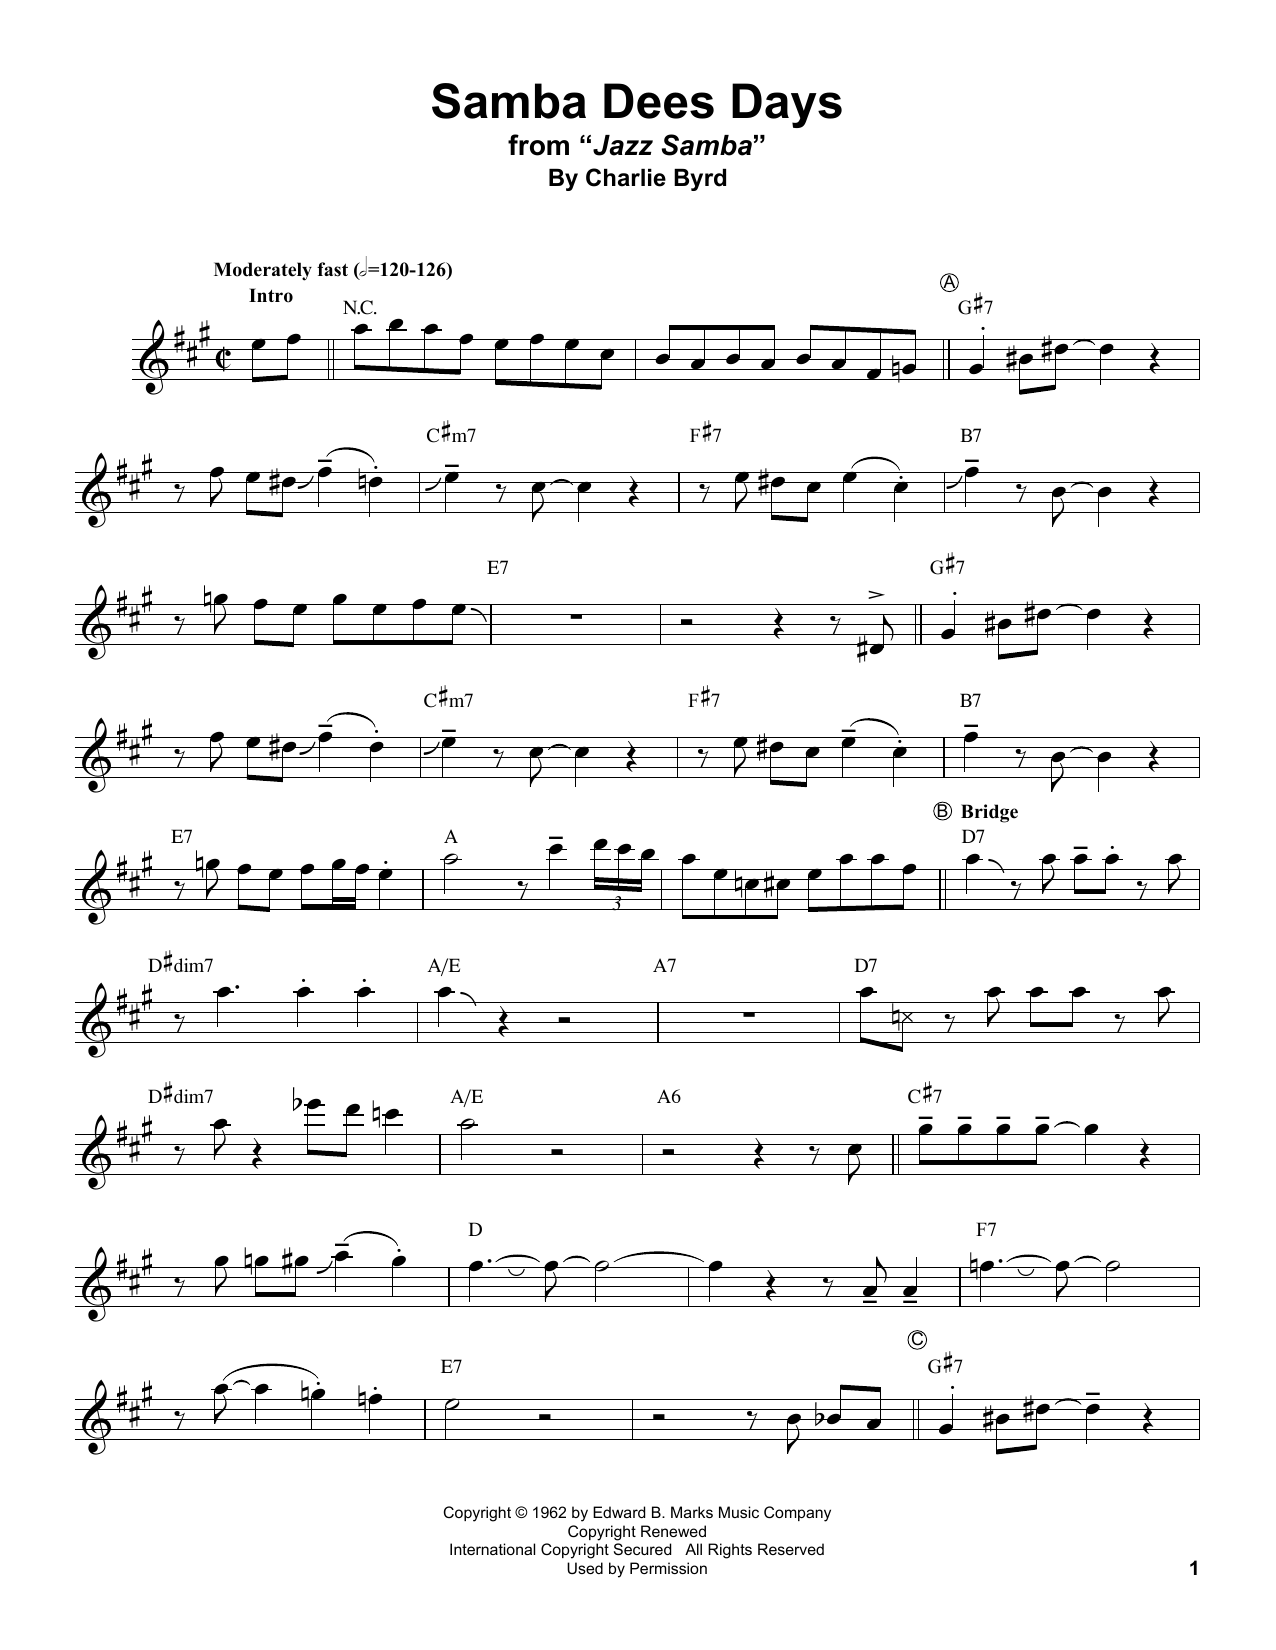 Stan Getz Samba Dees Days Sheet Music Notes & Chords for Tenor Sax Transcription - Download or Print PDF